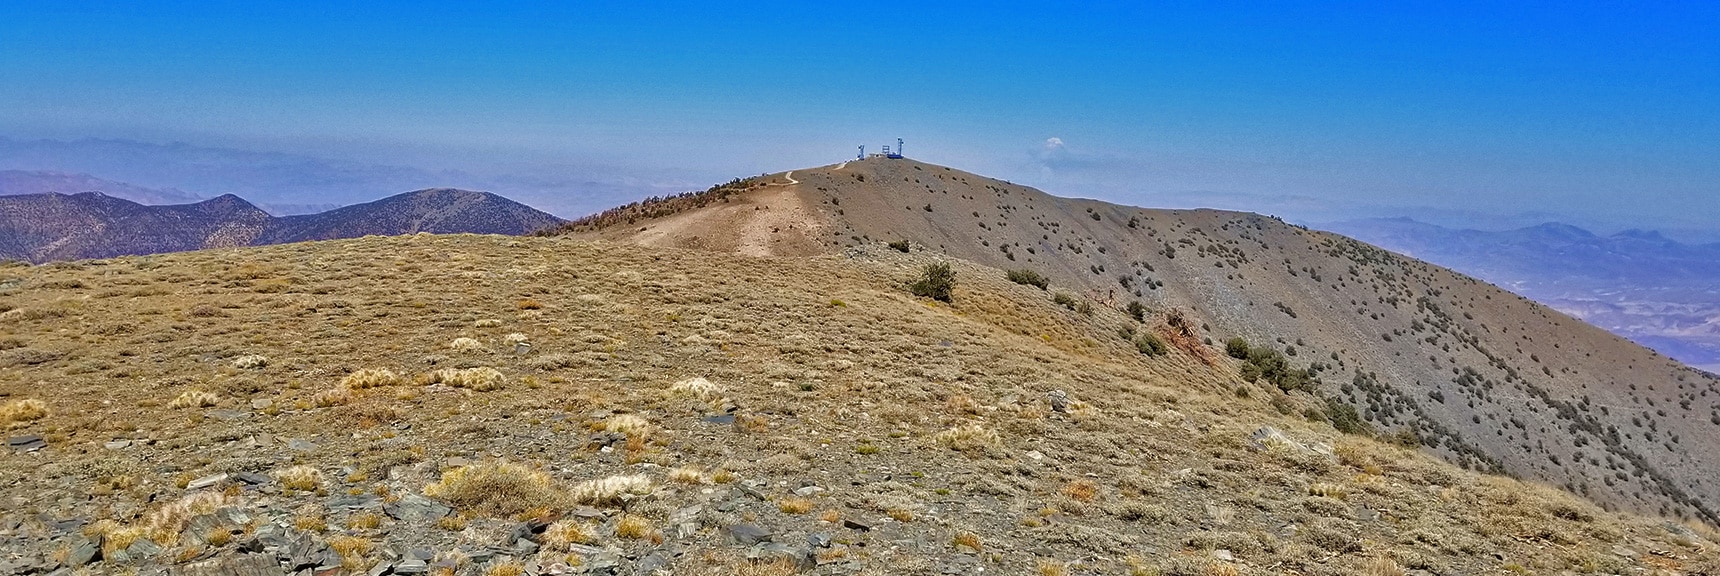 Rogers Peak Viewed from Bennett Peak Summit | Telescope Peak Summit from Wildrose Charcoal Kilns Parking Area, Panamint Mountains, Death Valley National Park, California